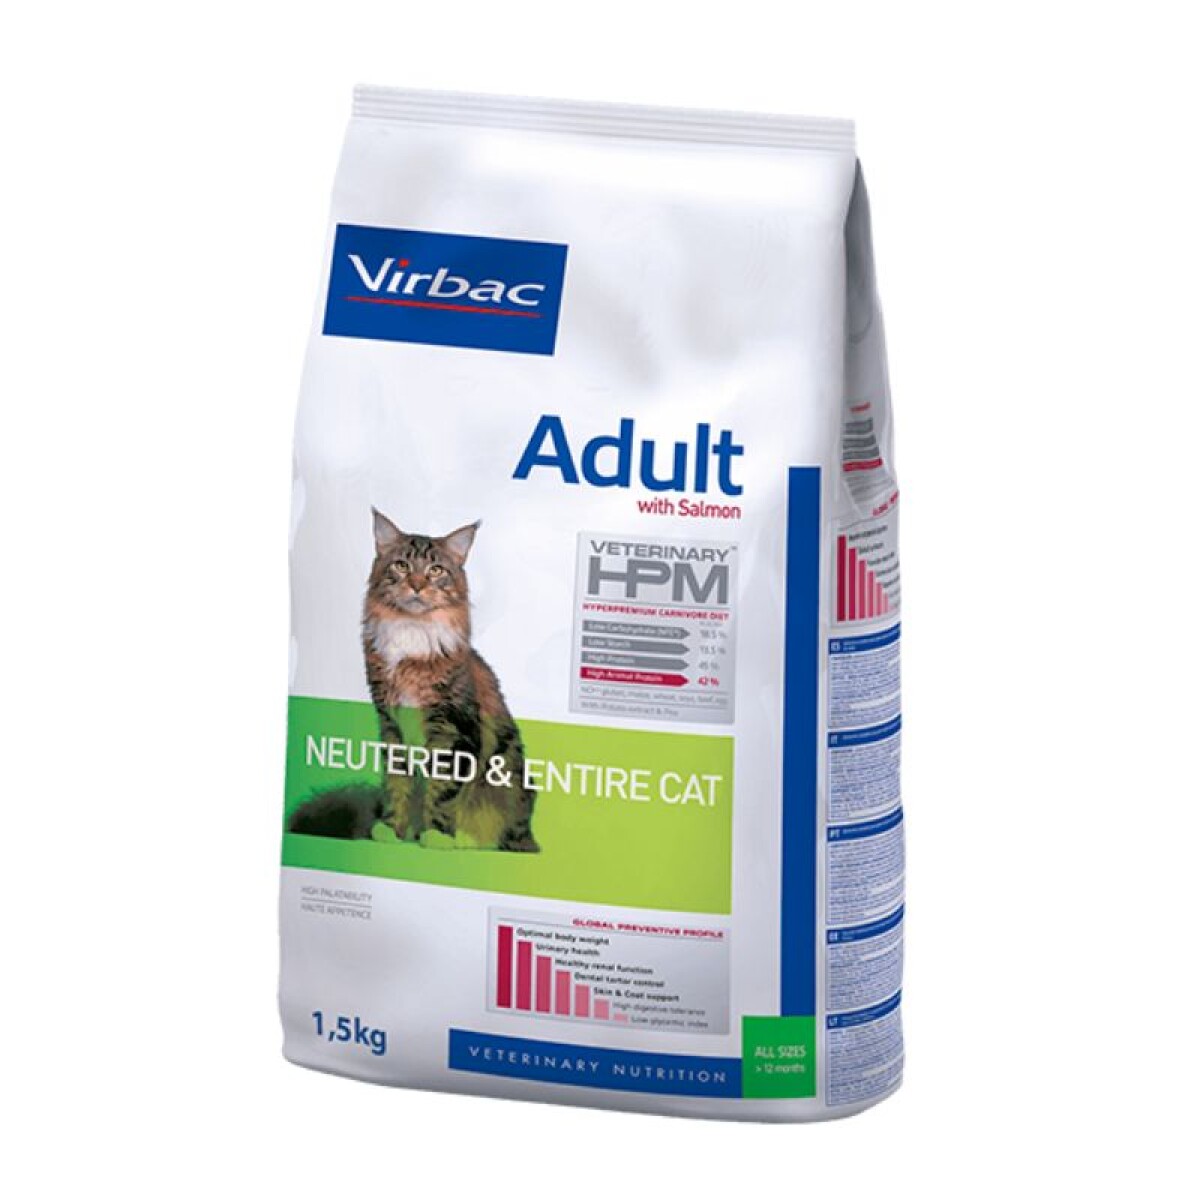 HPM CAT ADULT 1.5KG - Hpm Cat Adult 1.5kg 